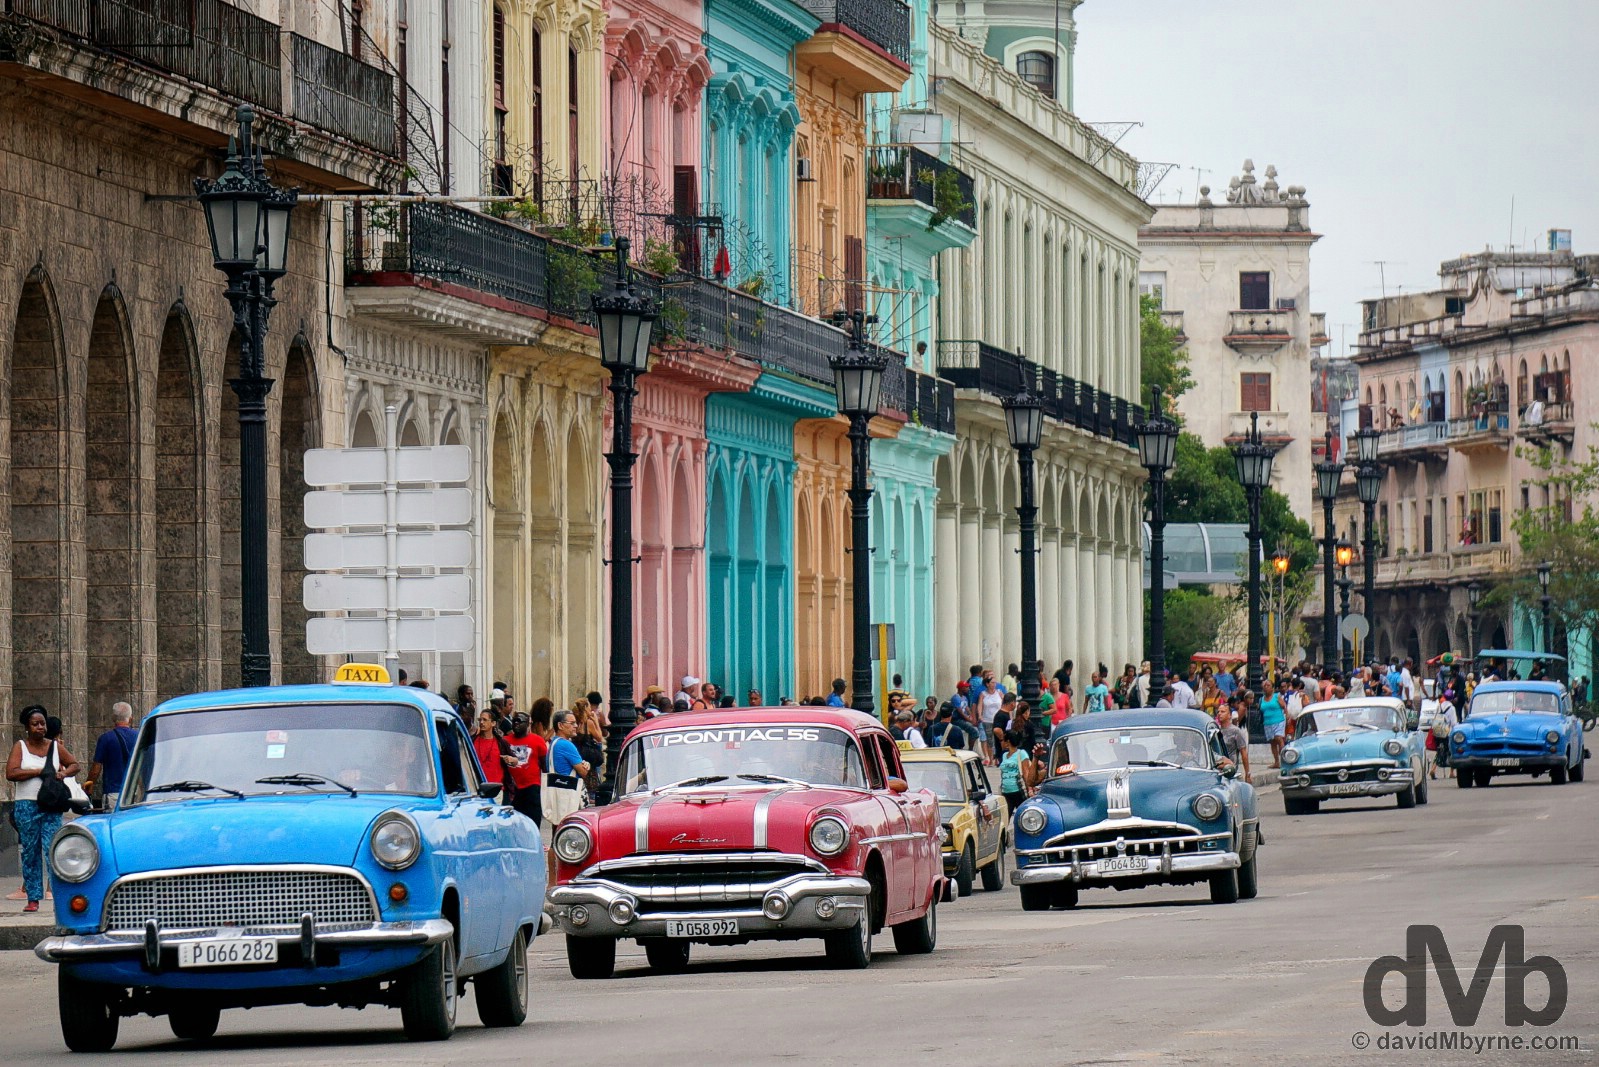 1950s Americana on Prado (Paseo de Marti) in central Havana, Cuba. April 30, 2015.